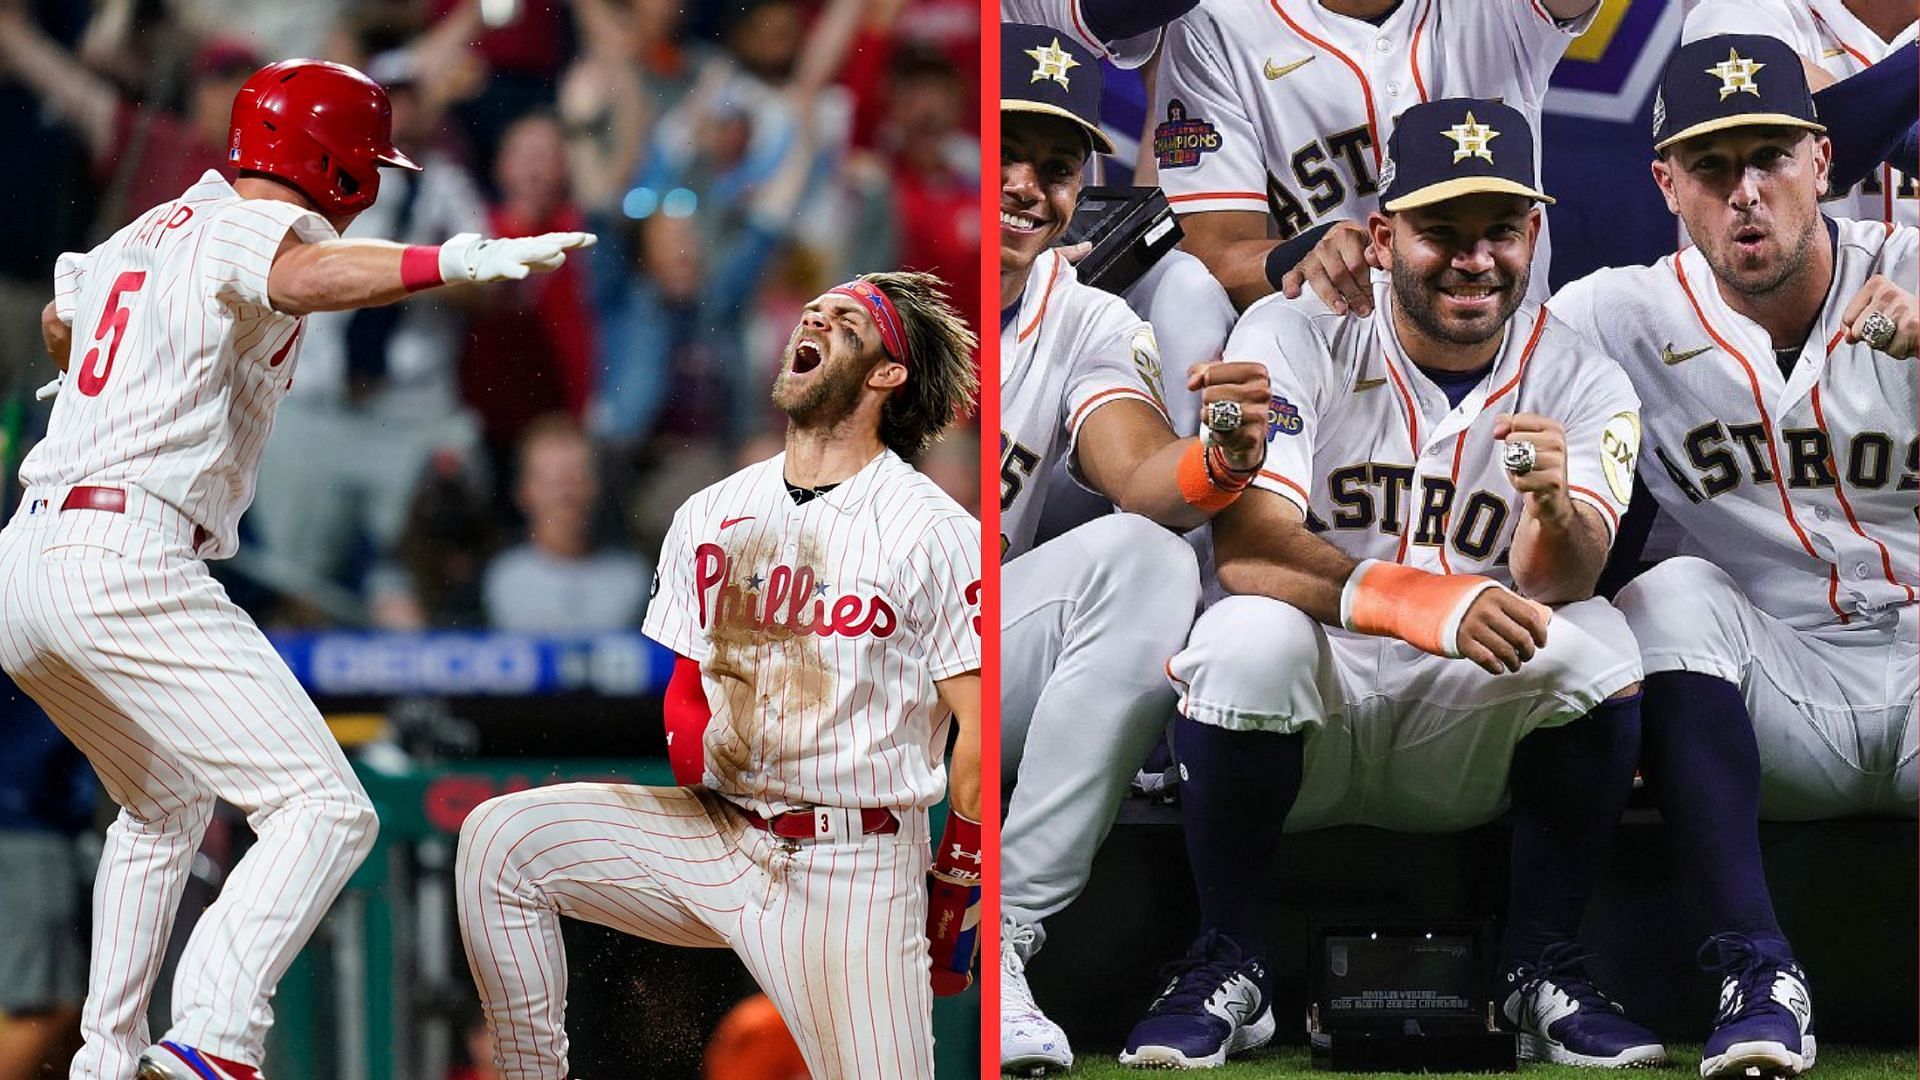 The hotshot Houston Astros take on the Philadelphia Phillies in